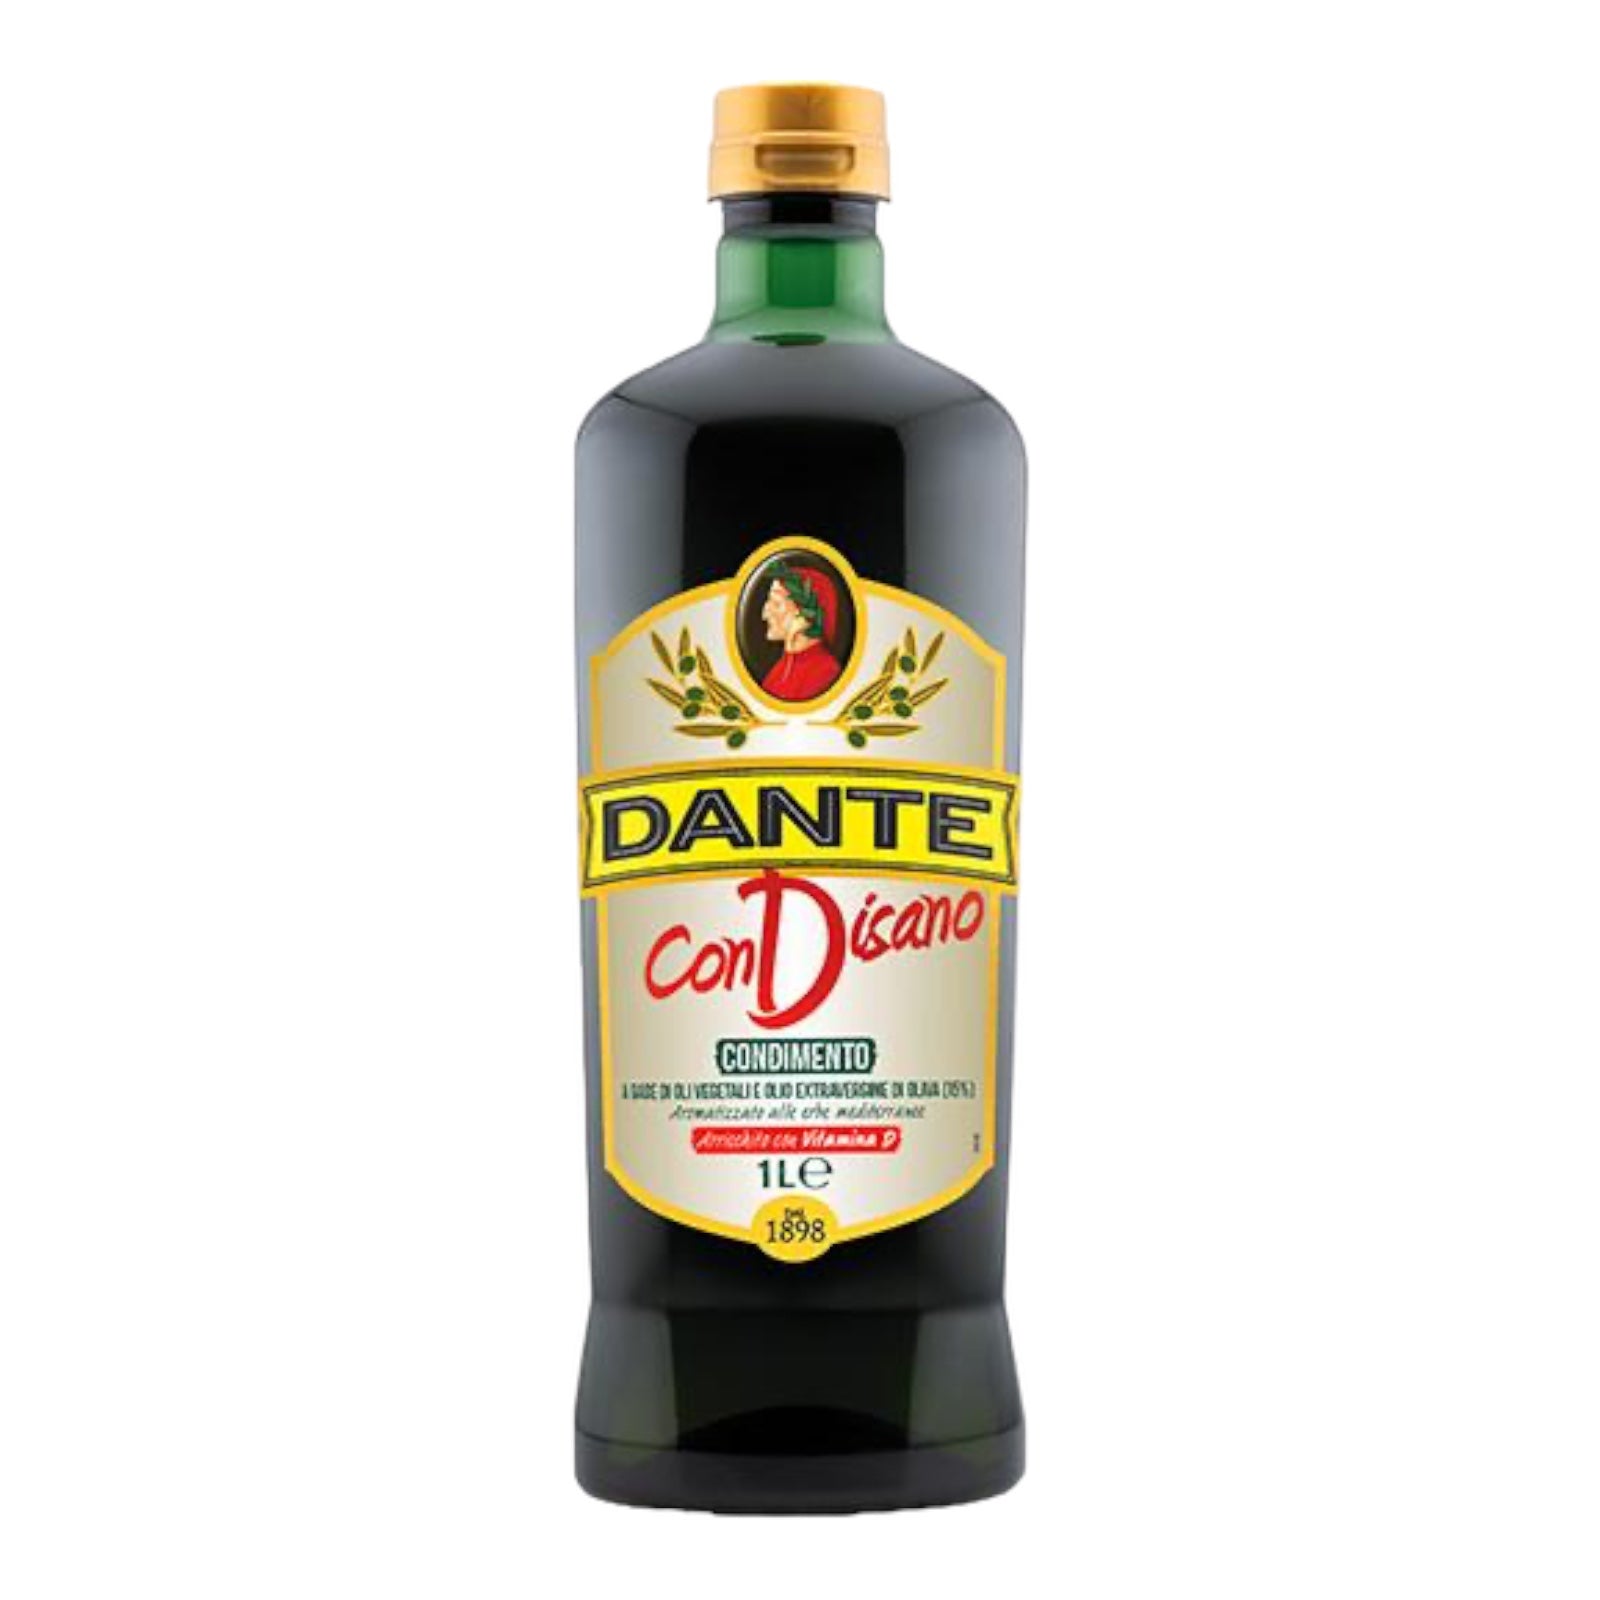 Dante ConDisano
Vegetables Oil & Extra Virgin Olive Oil 1l